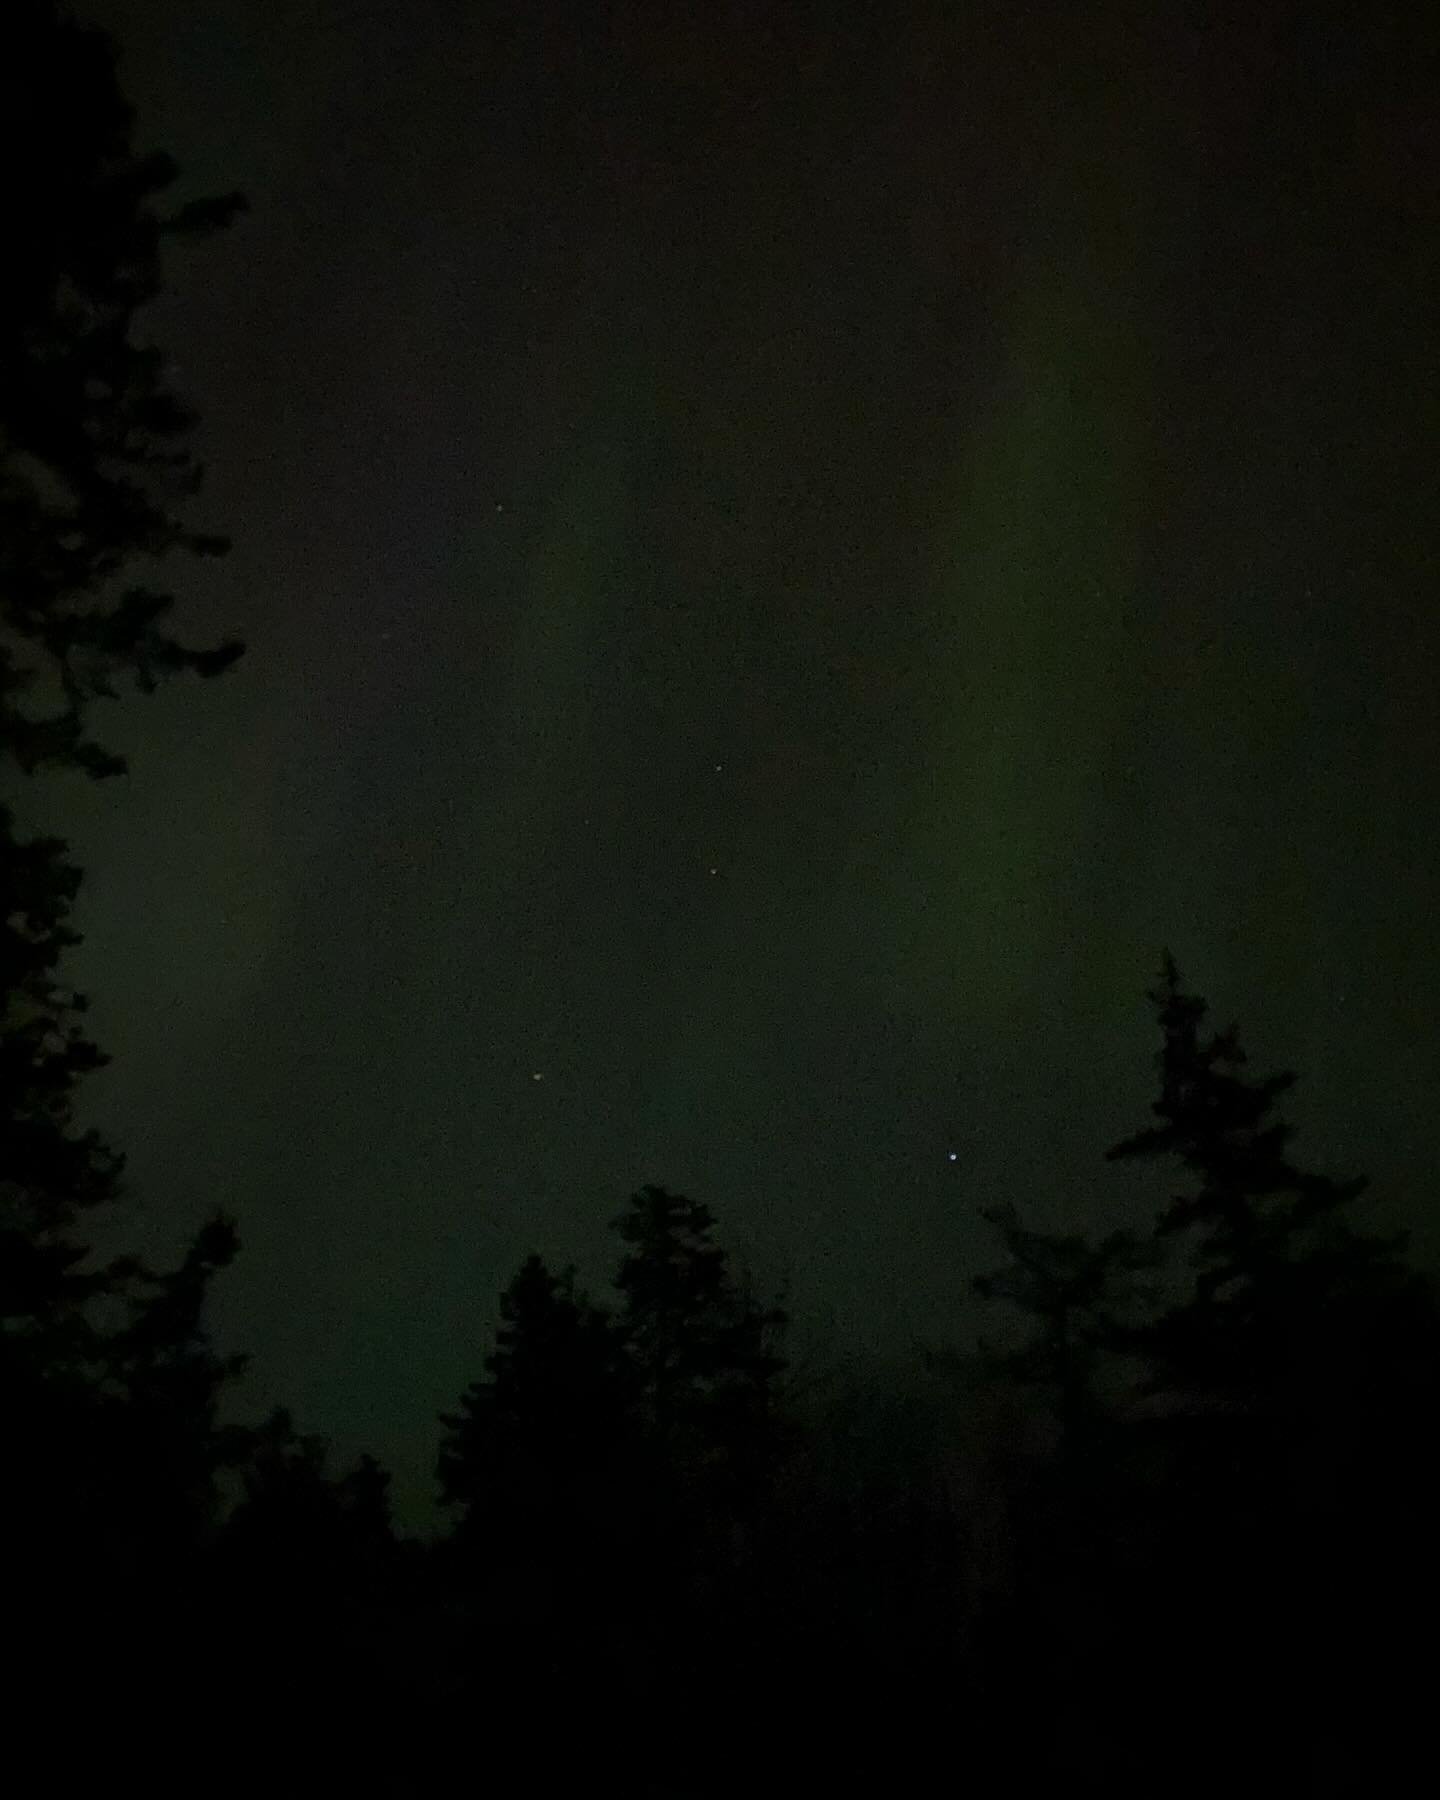 Aurora borealis - the last photo was taken in &lsquo;live&rsquo; mode ✨✨✨